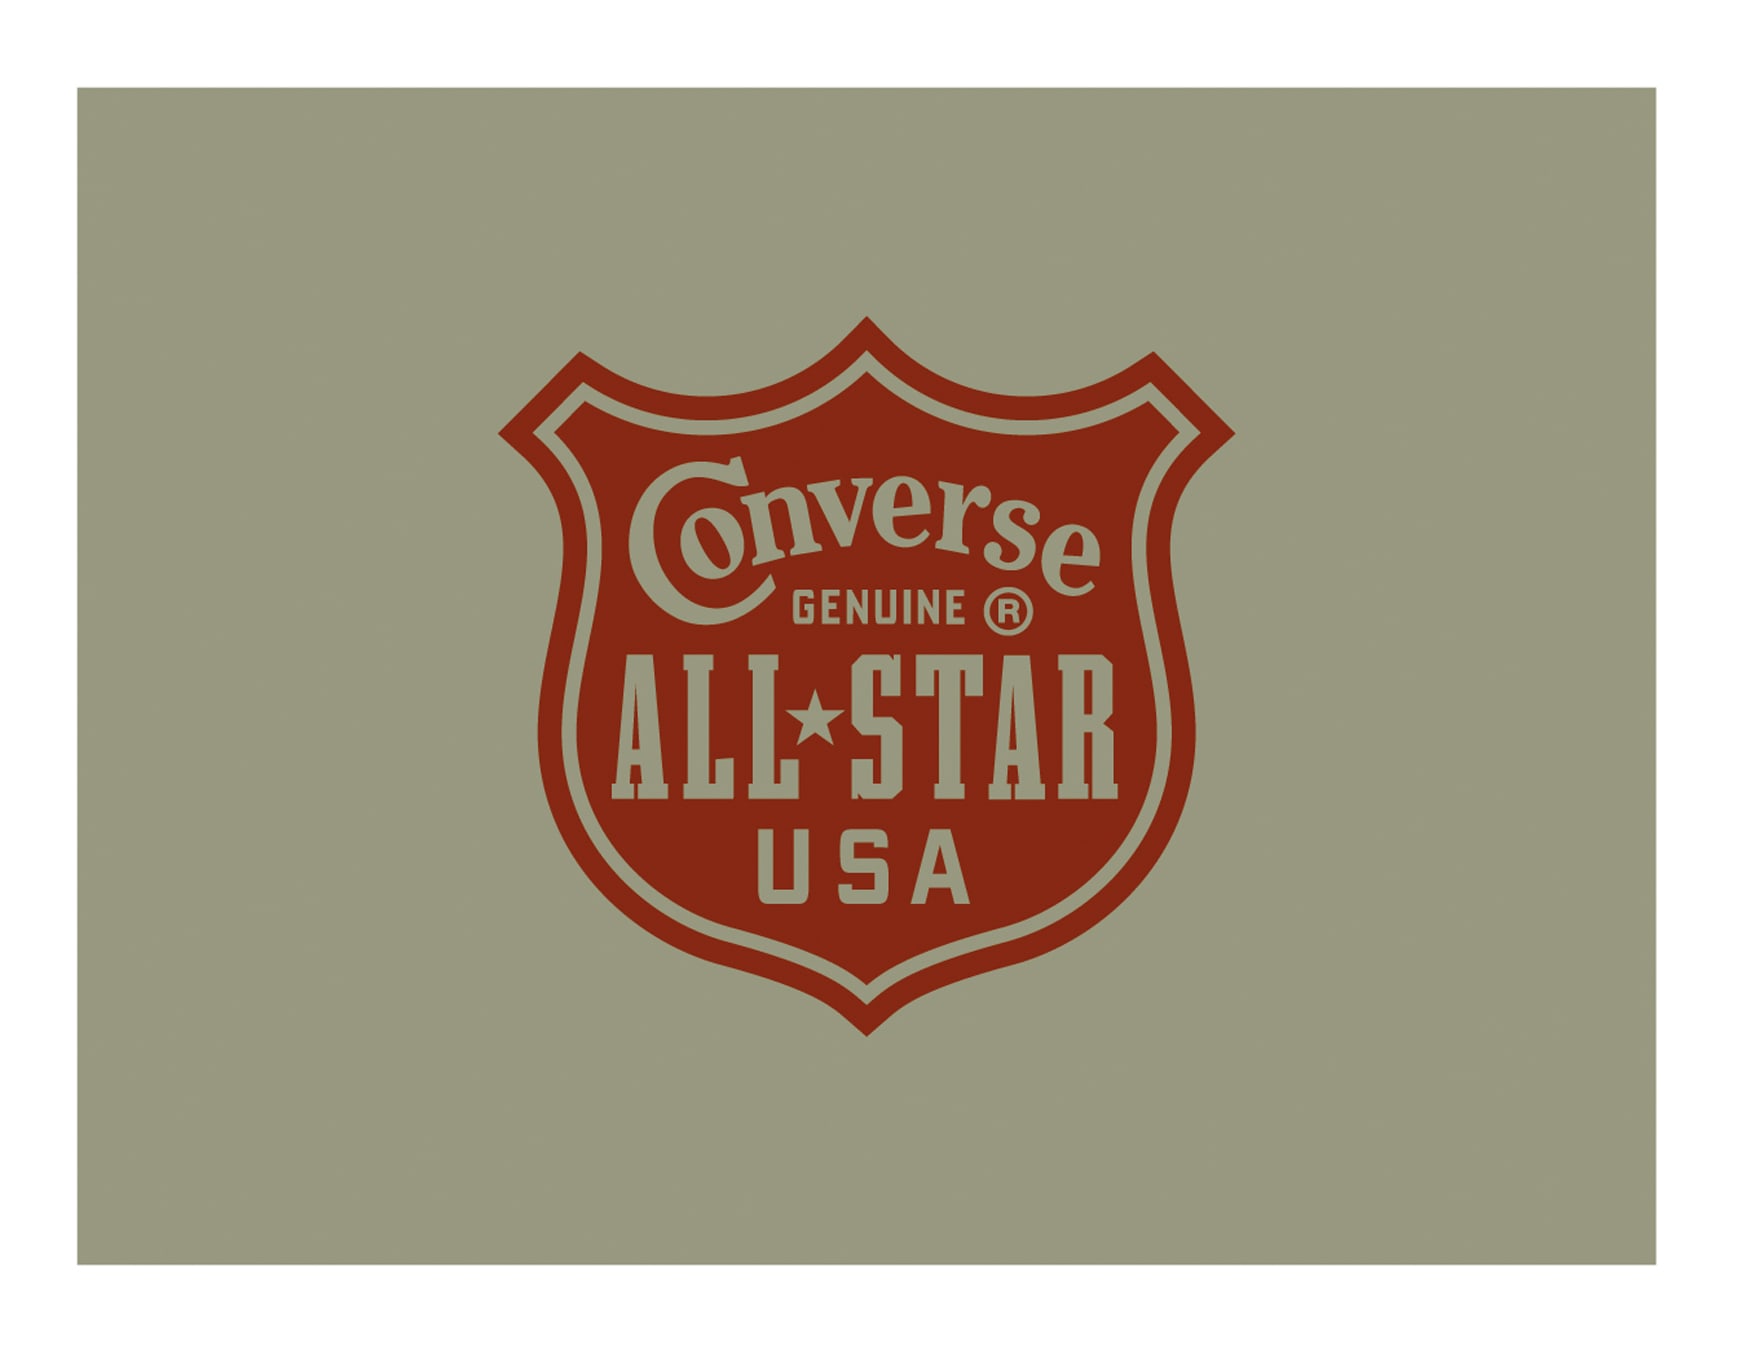 Converse All-Star logo design